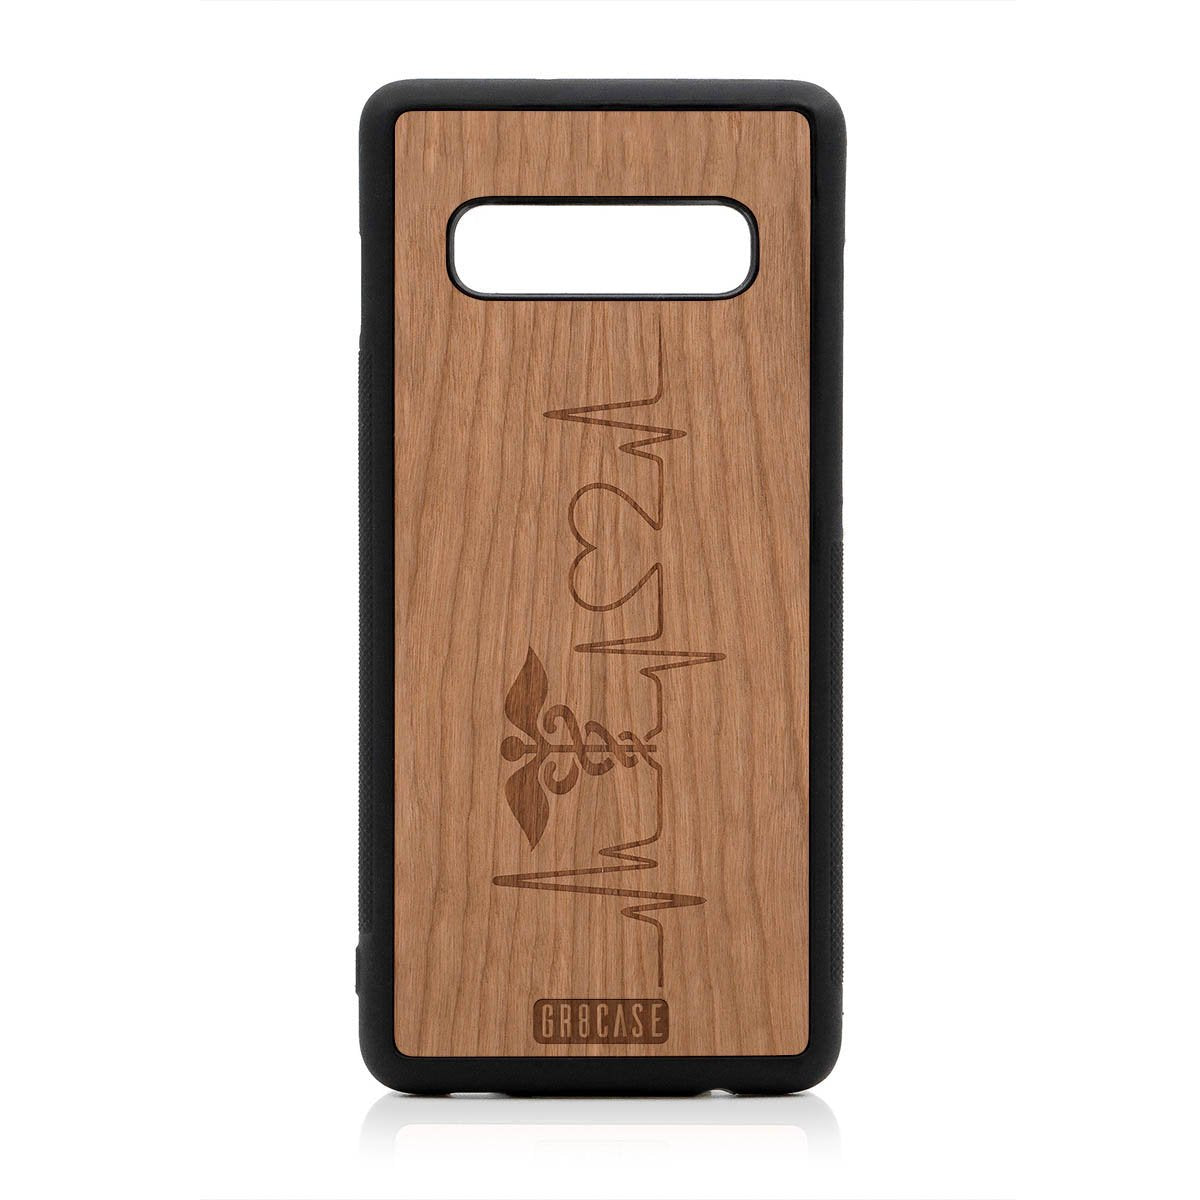 Hero's Heart (Nurse, Doctor) Design Wood Case Samsung Galaxy S10 Plus by GR8CASE